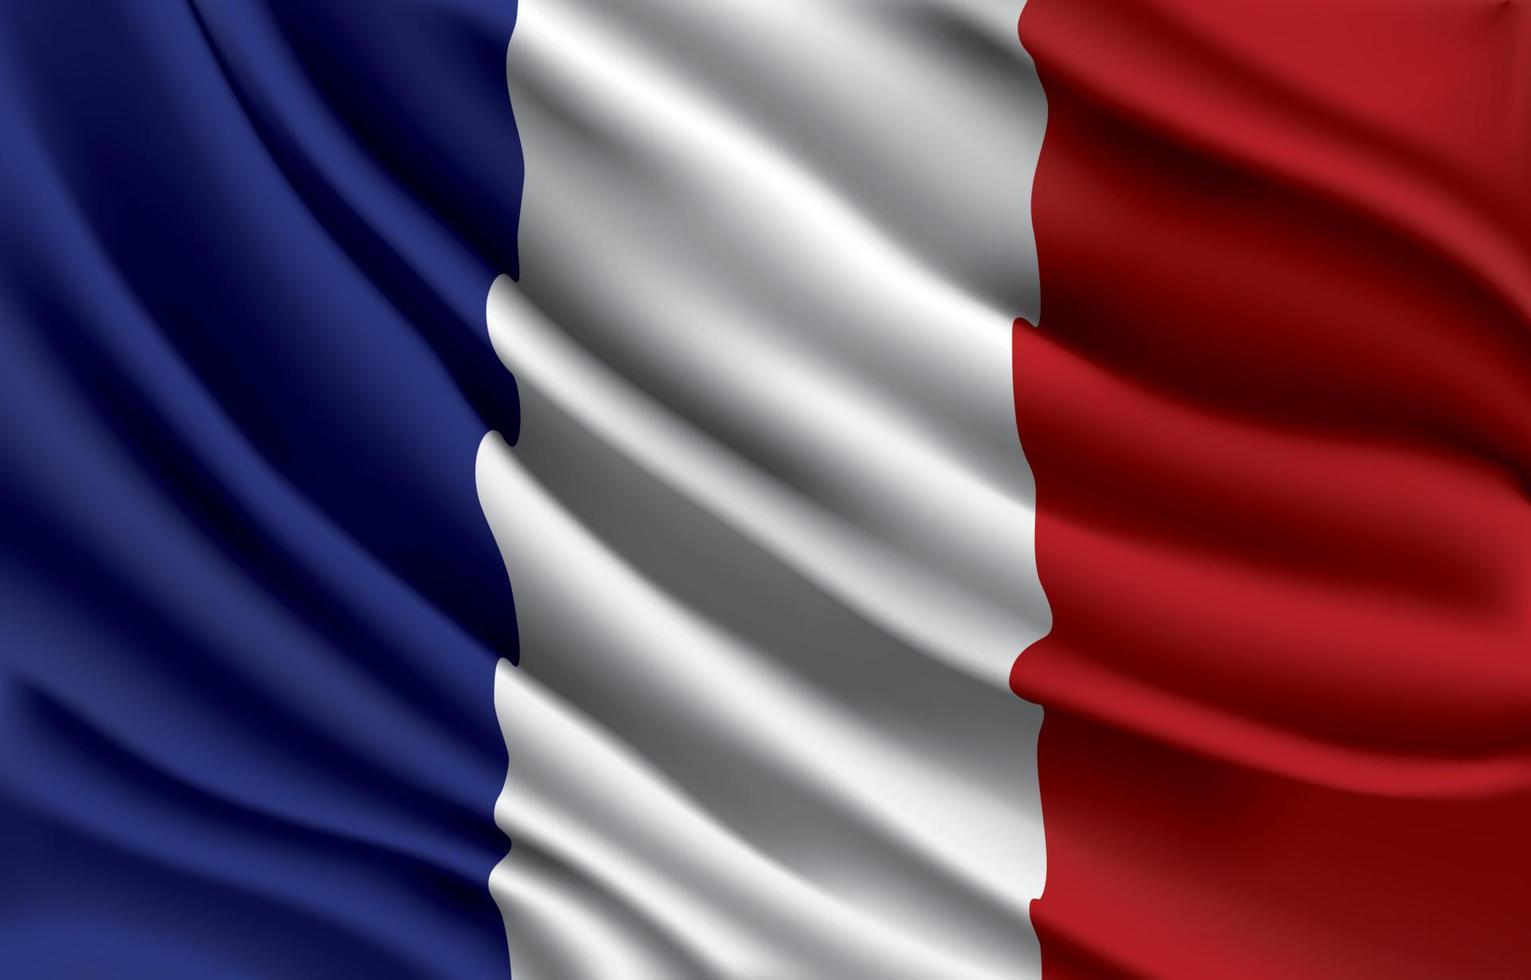 france national flag waving realistic vector illustration